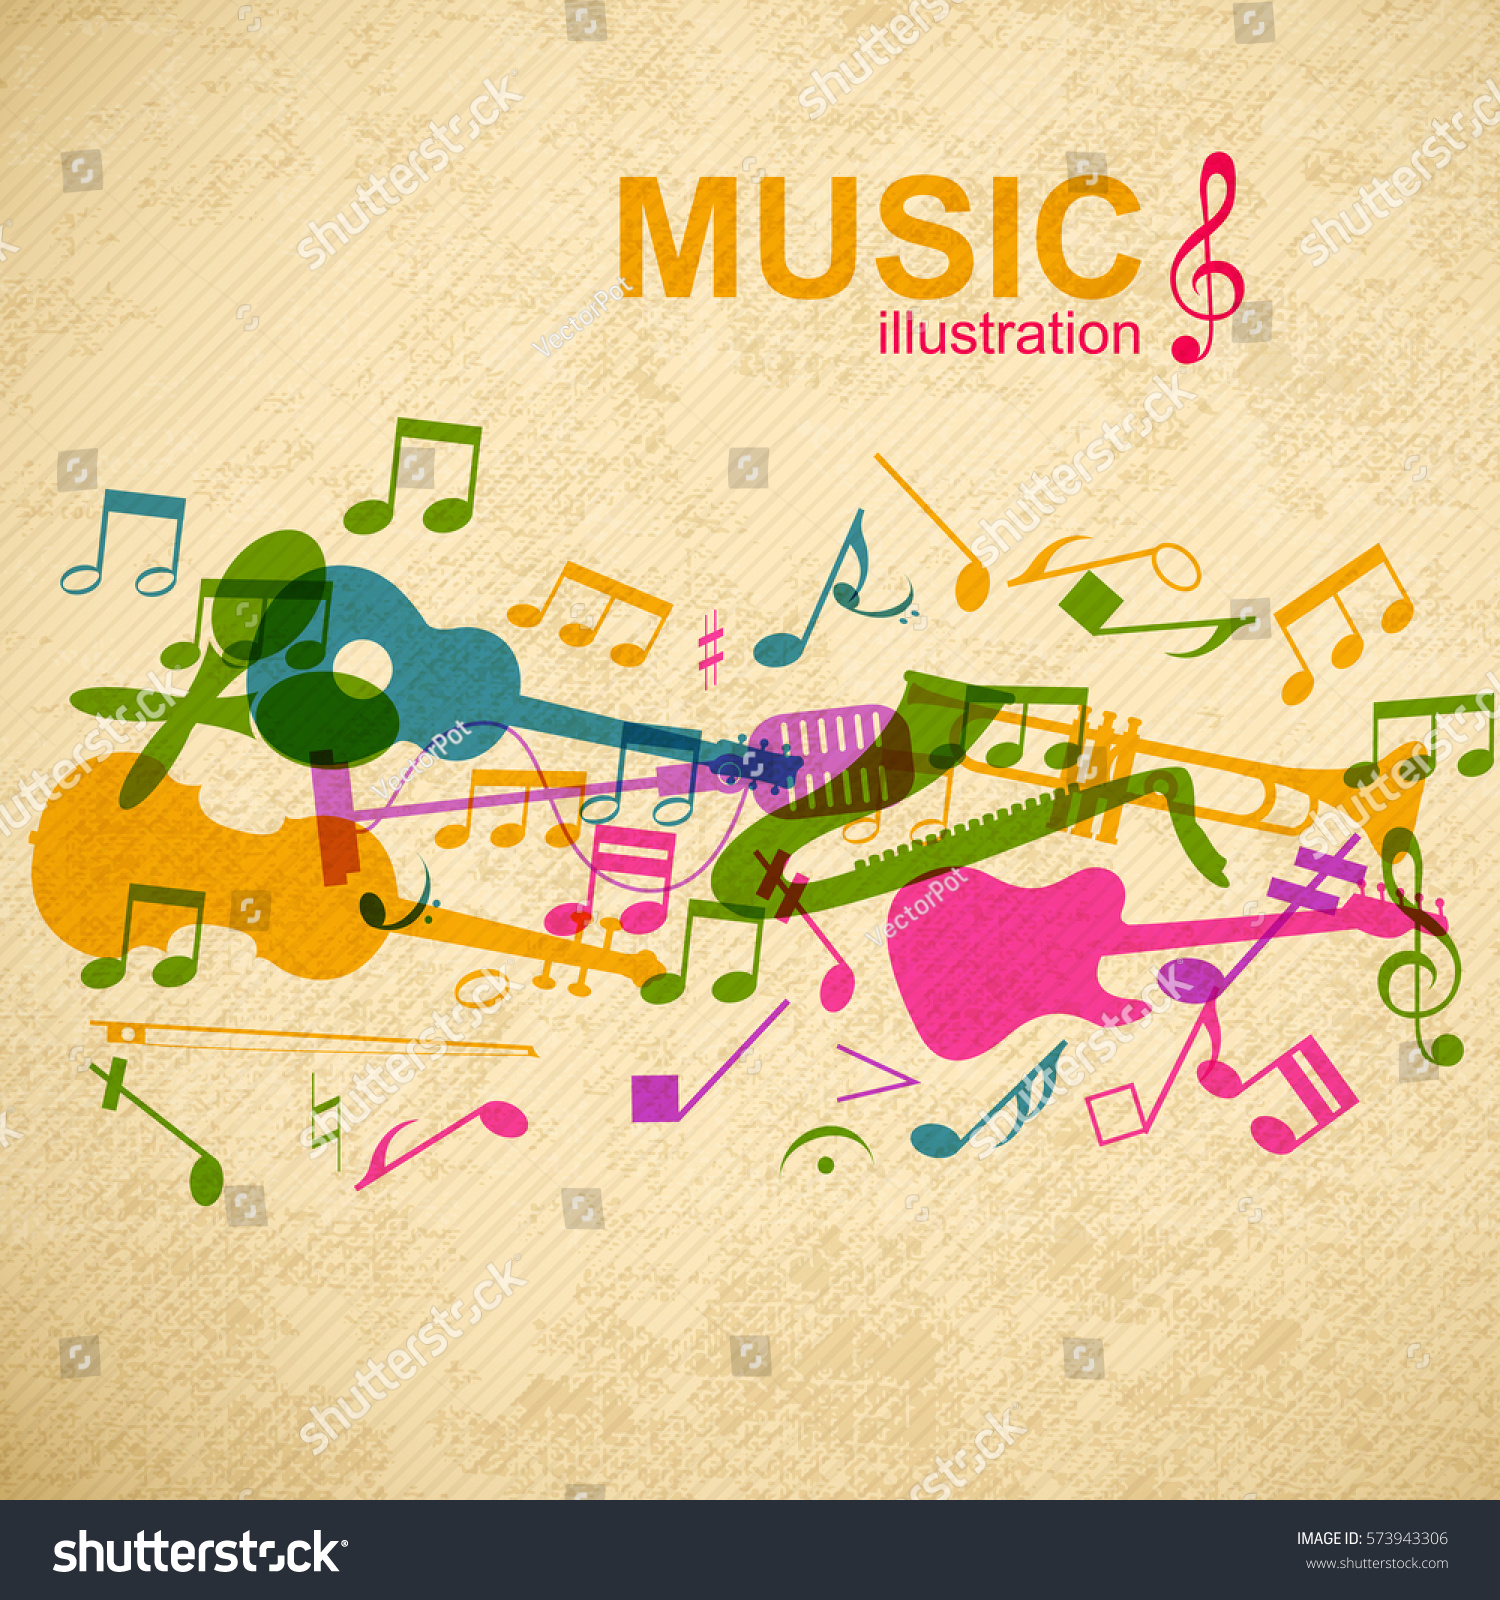 Edit Vectors Free Online - Music design | Shutterstock Editor